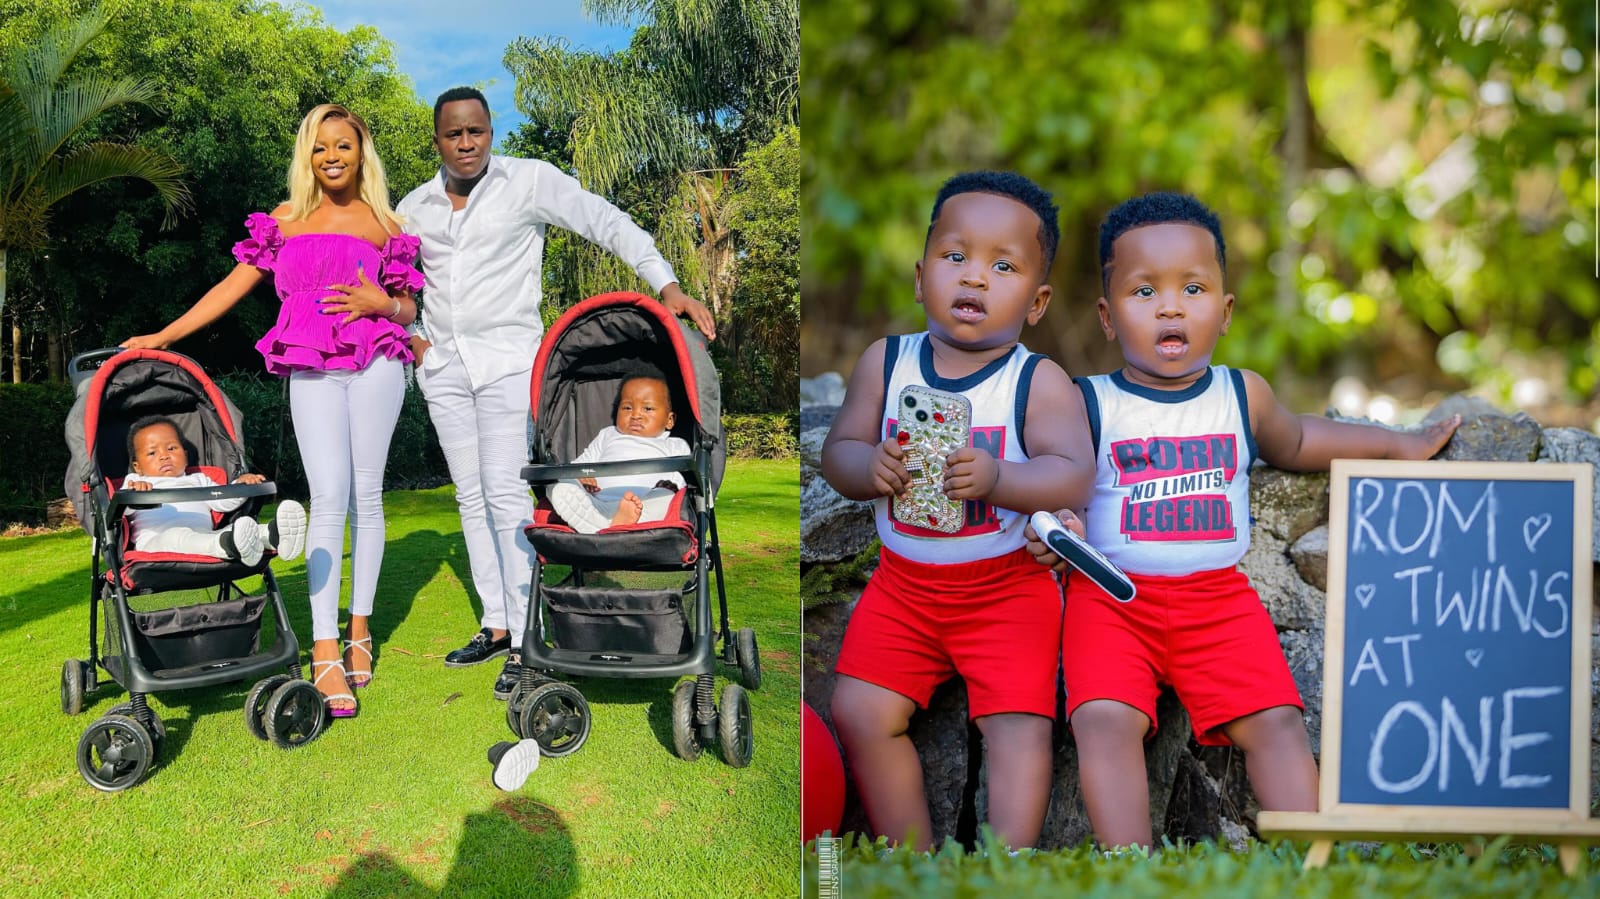 Nicholas Kioko and Wambo Ashley Celebrate Their Twins' birthday